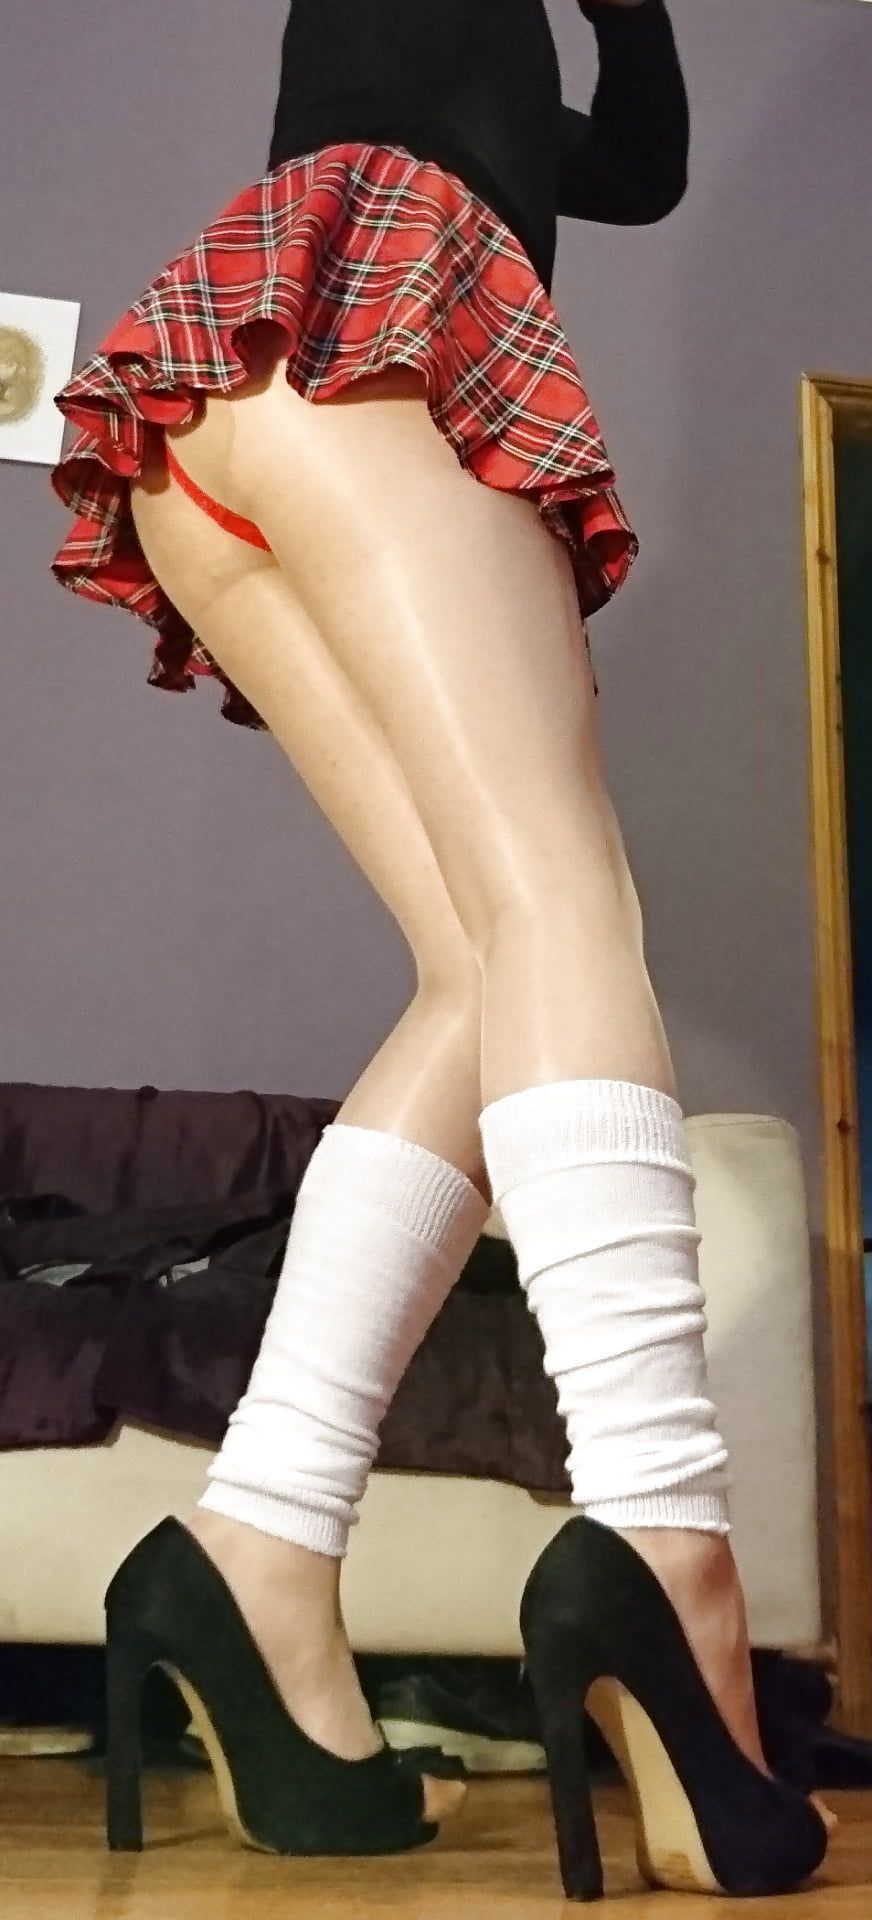 Marie crossdresser college girl, leg warmers and pantyhose #10